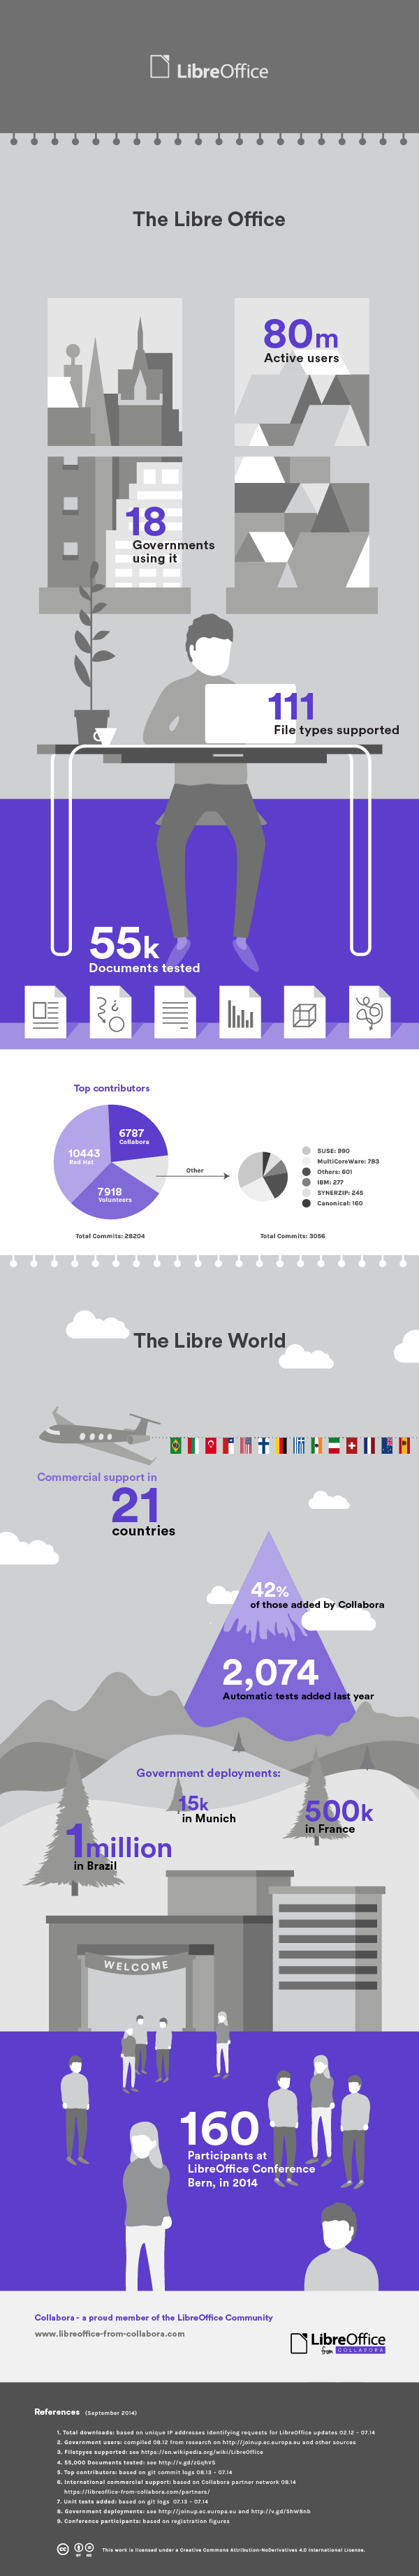 LibreOffice infographic